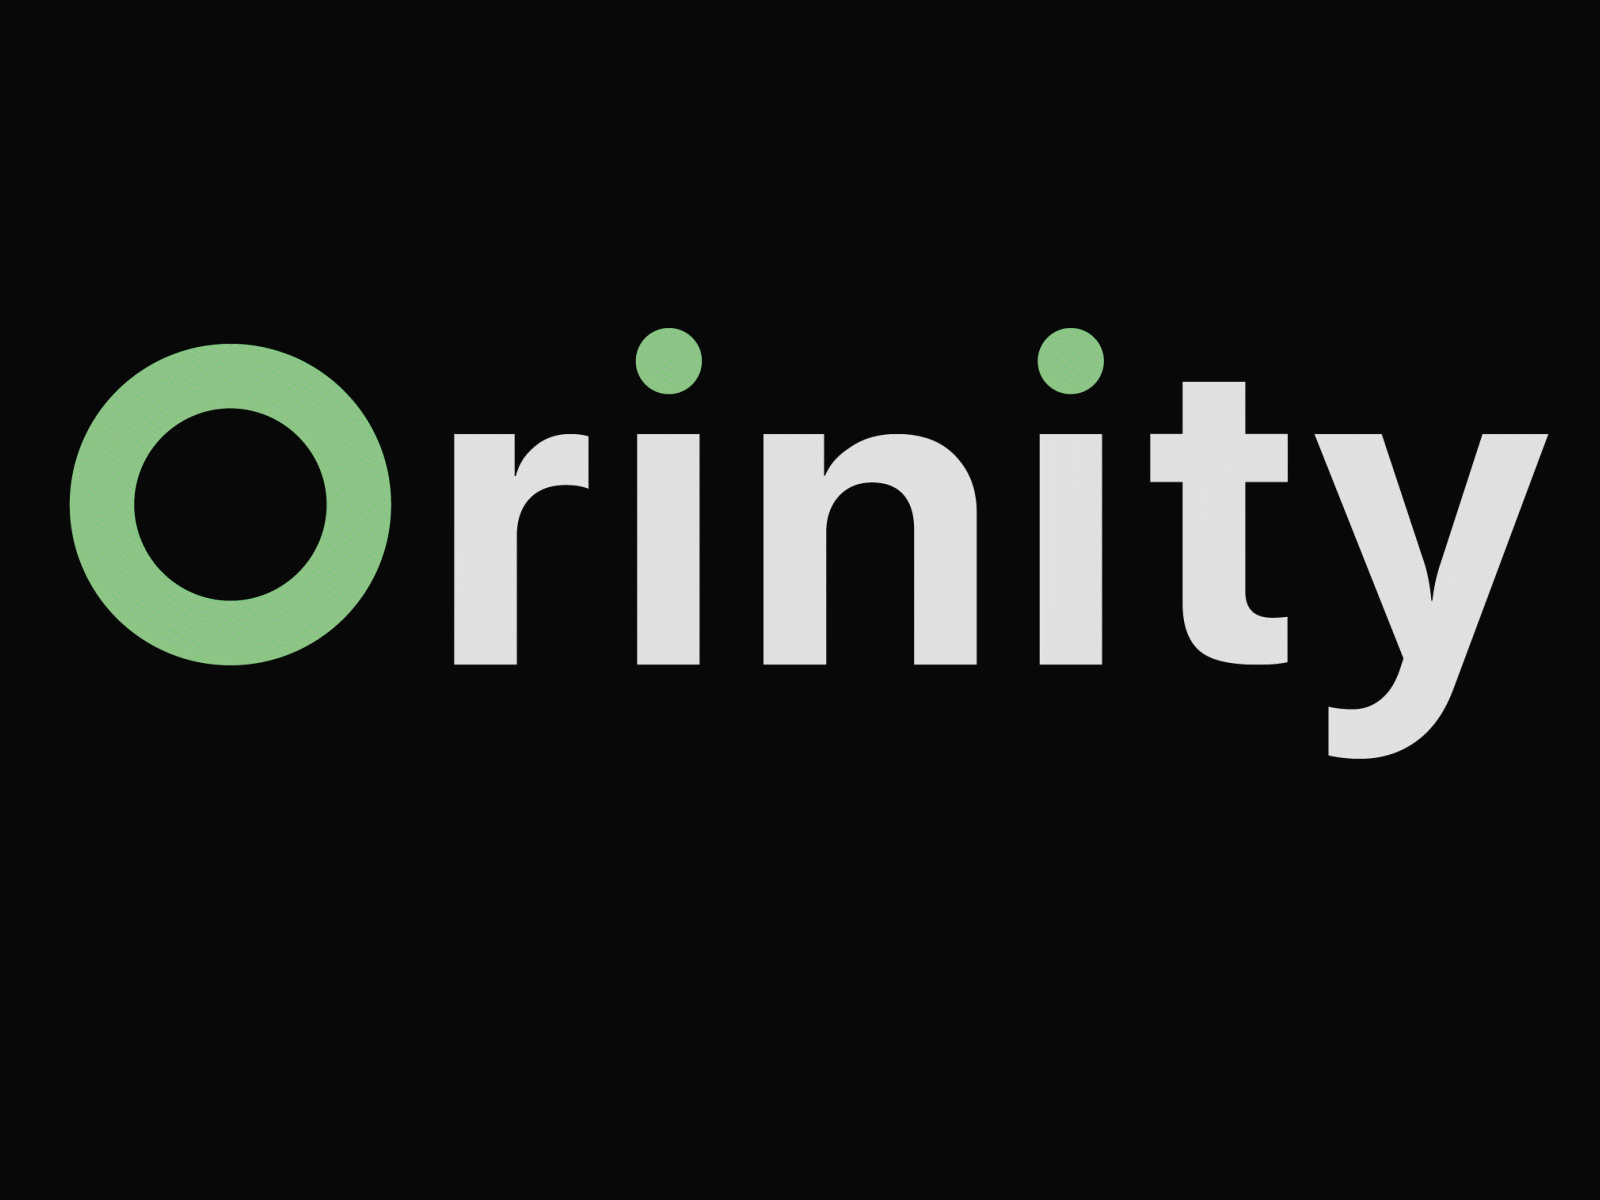 Grinity - Green logo animation